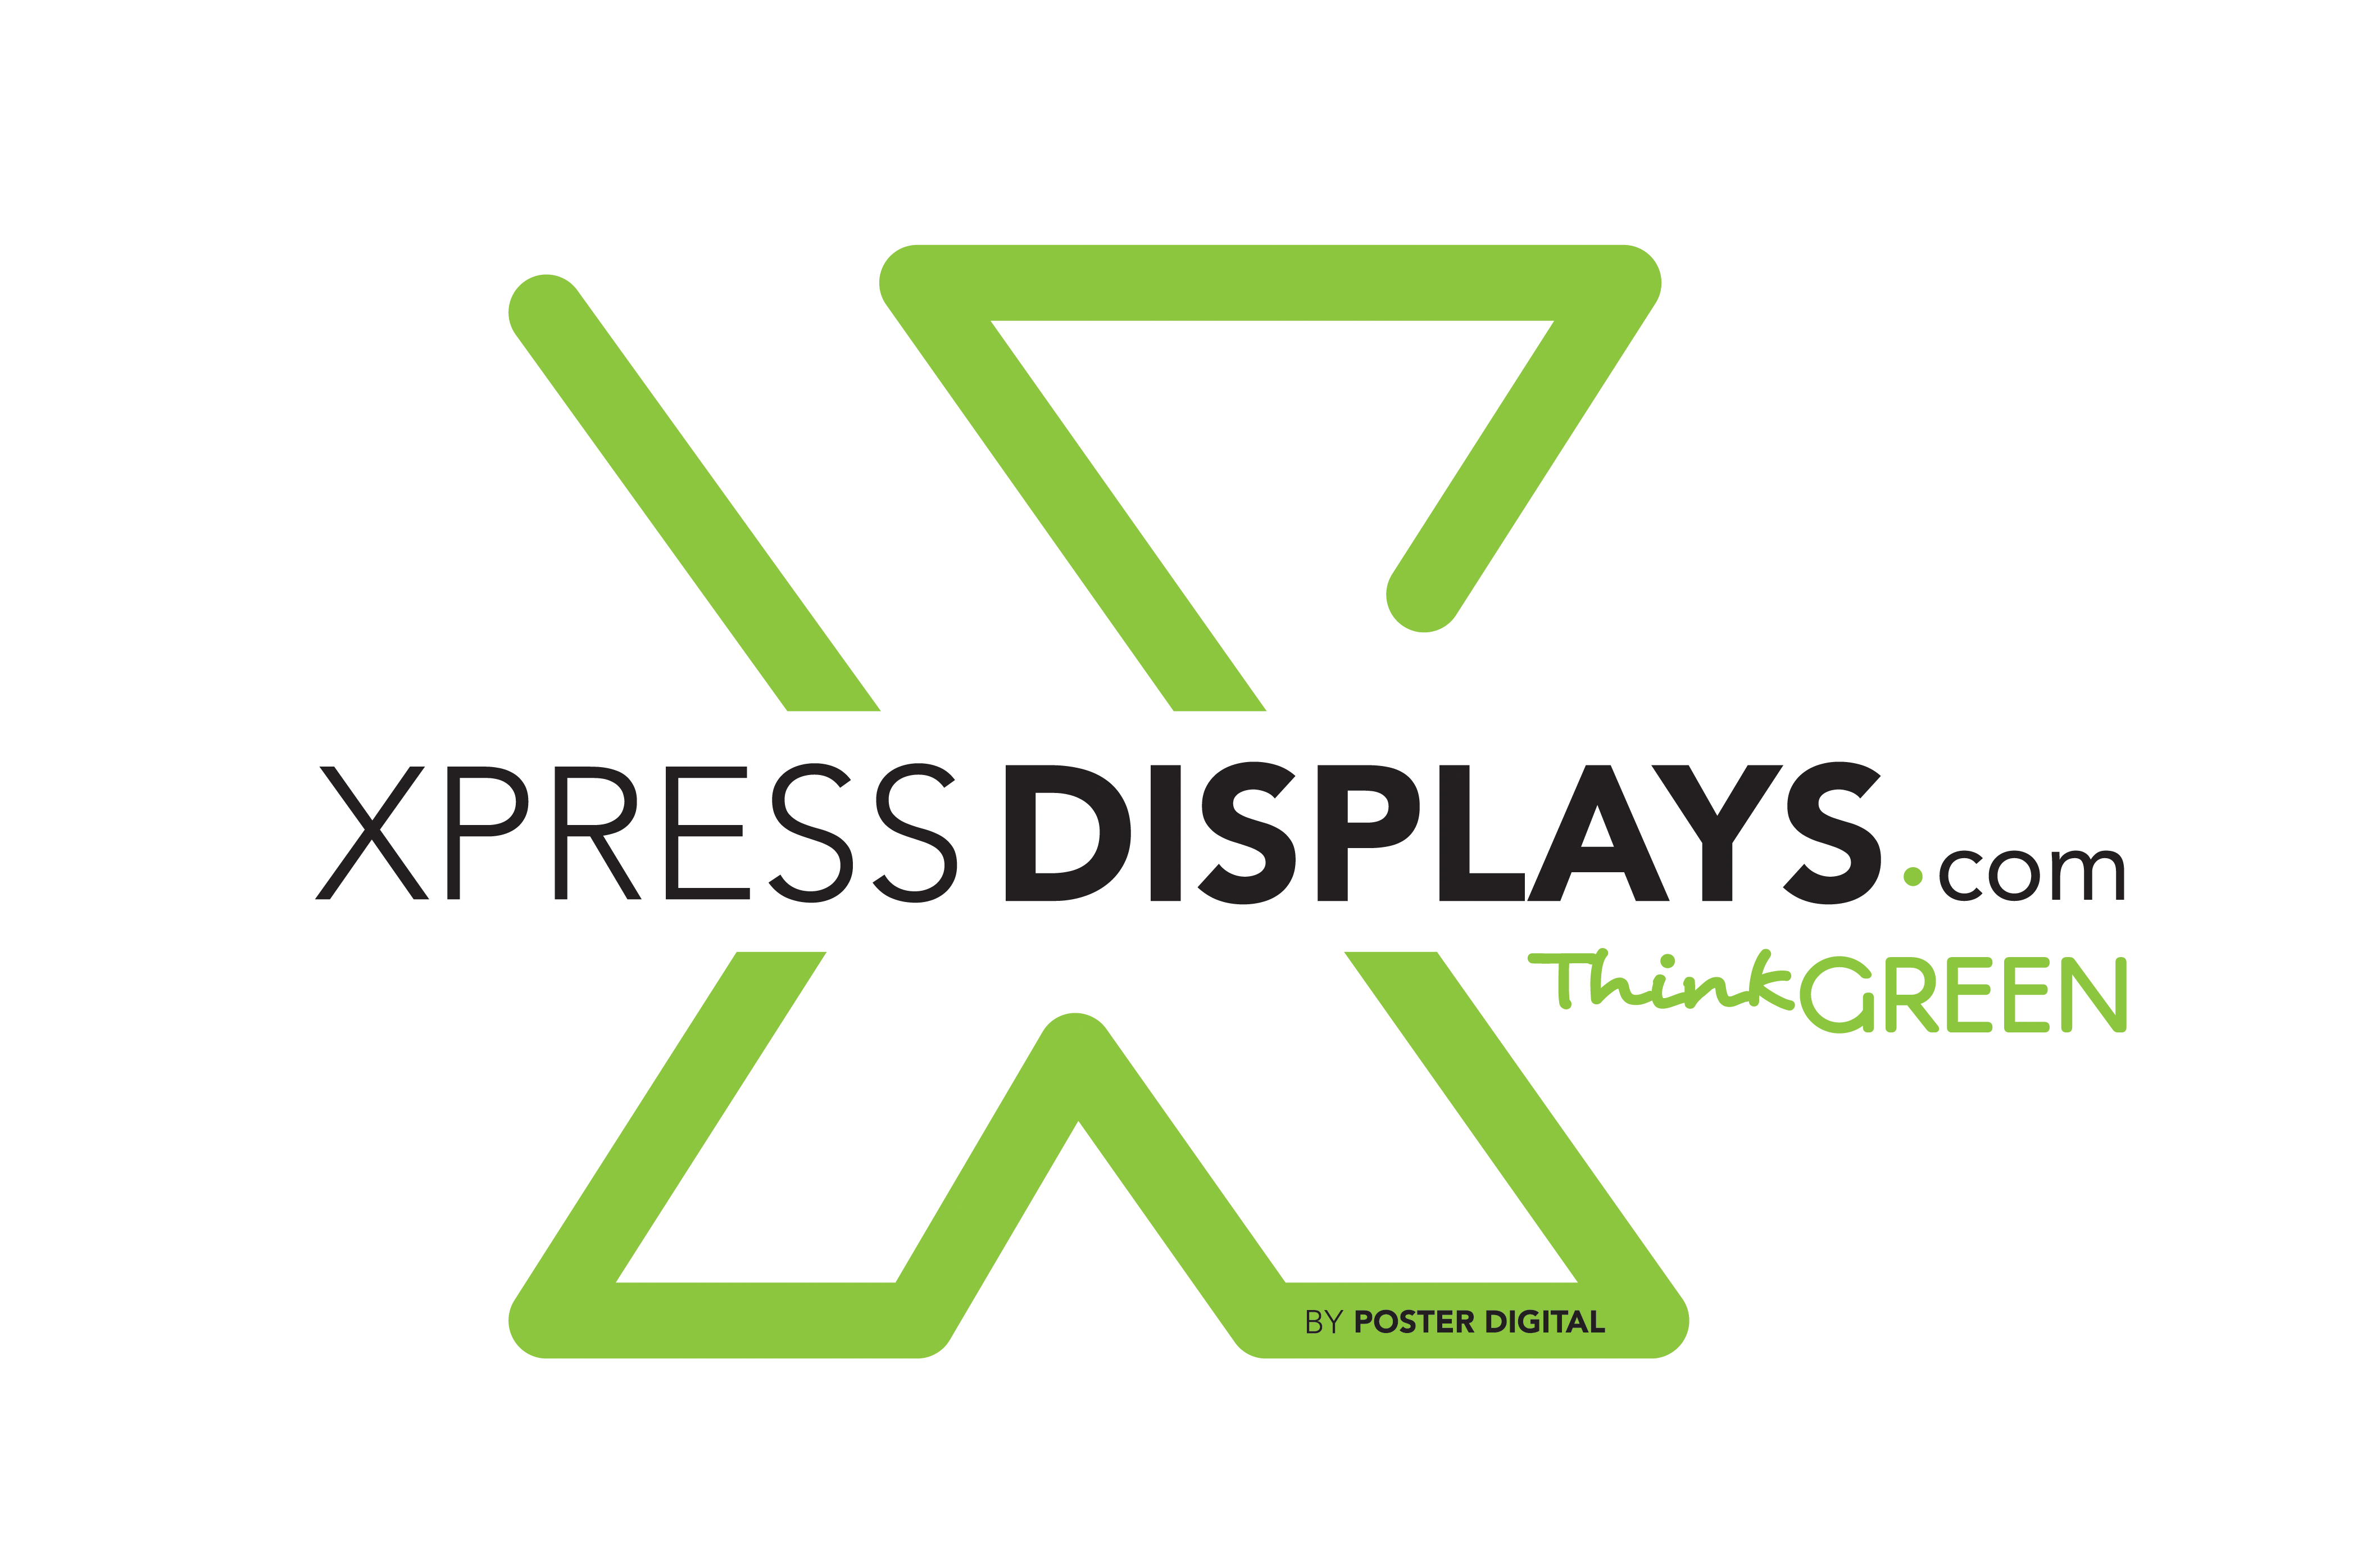 XPress Displays